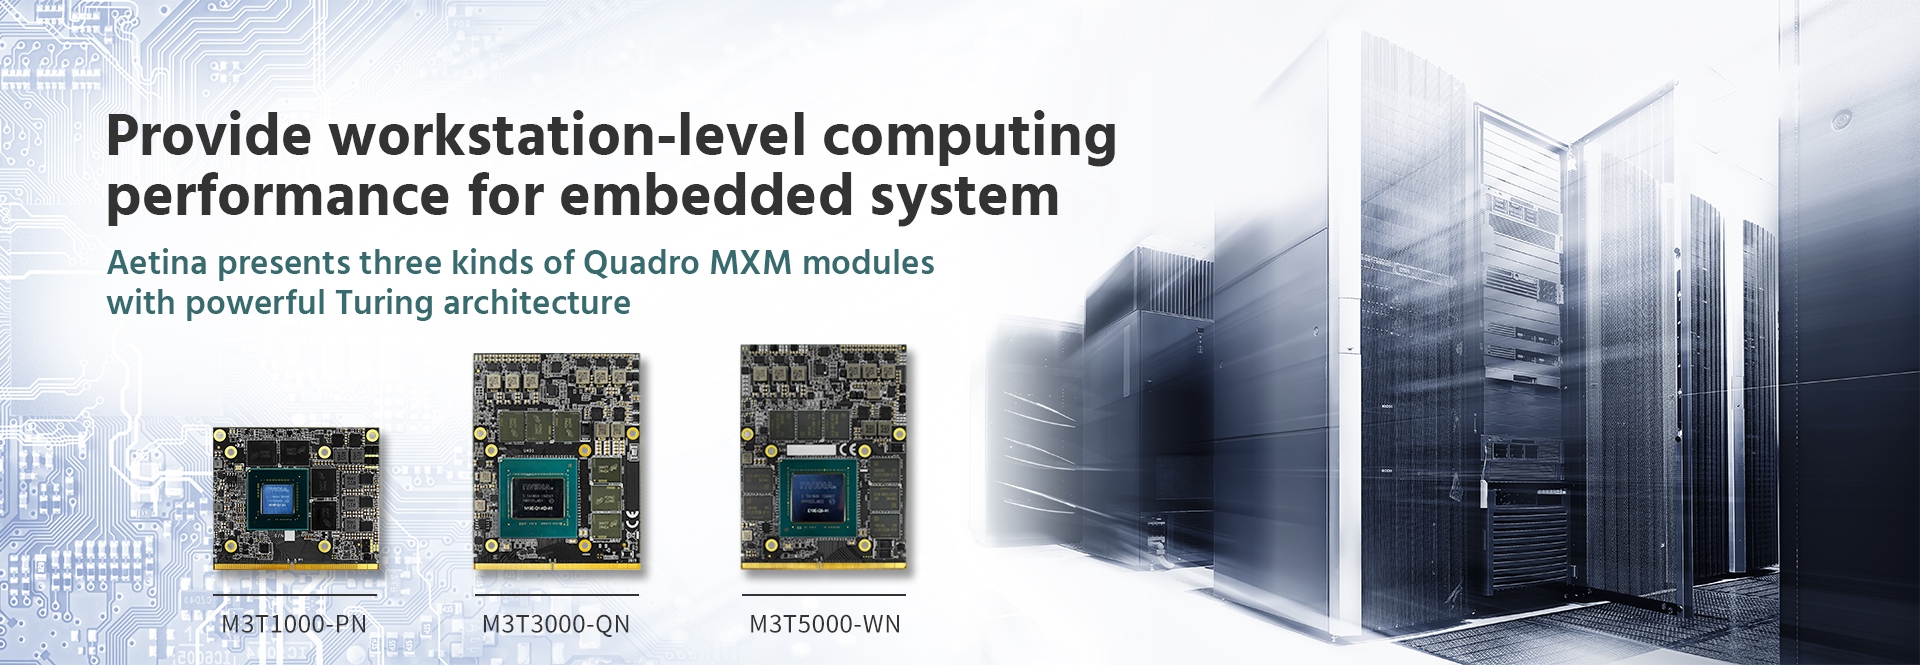 Provide workstation-level computing performance for embedded system